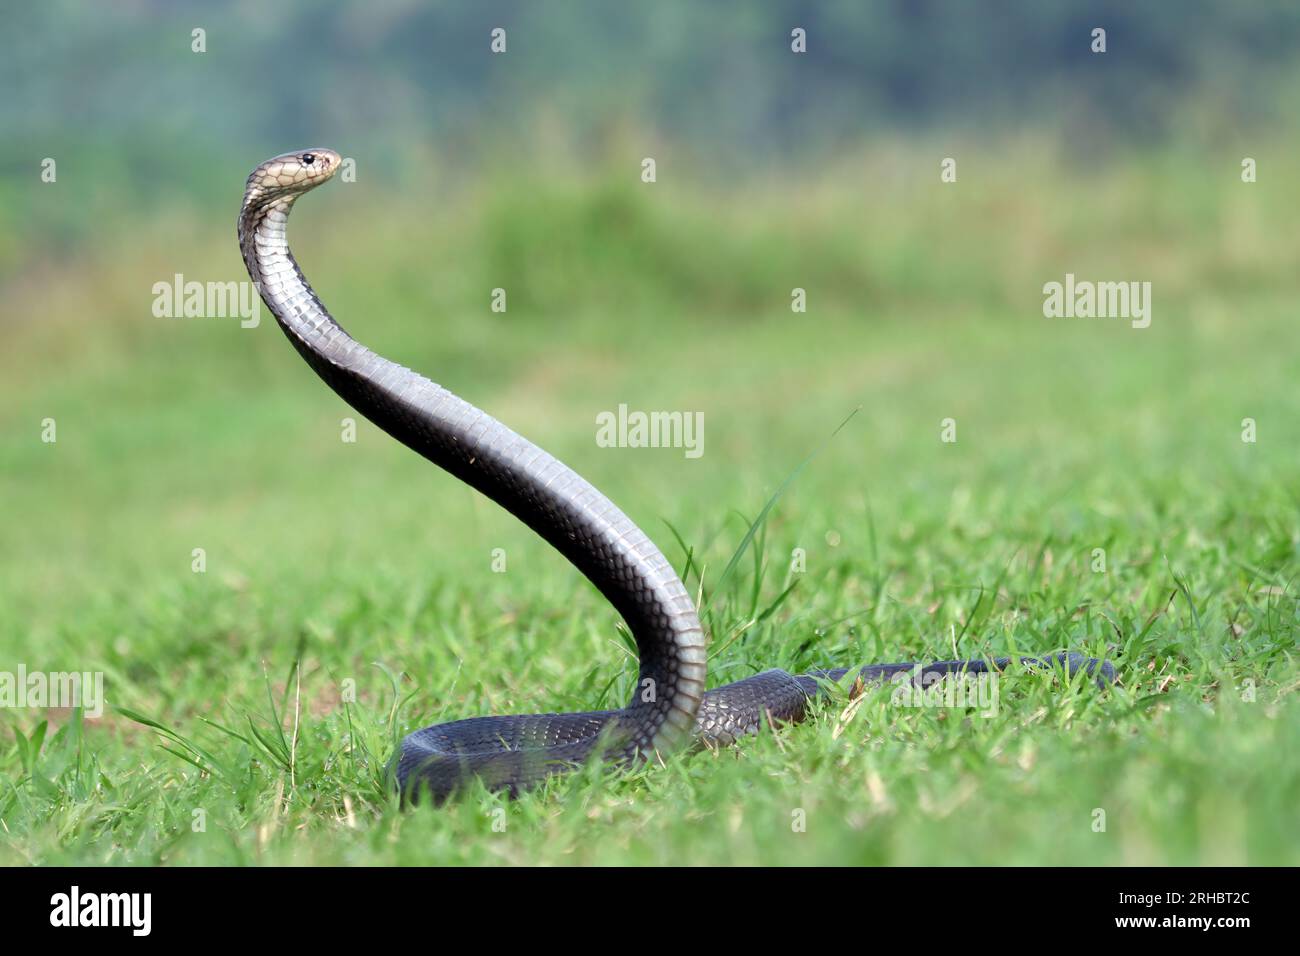 Javan cobra (Naja sputatrix) rearing up ready to strike, Indonesia Stock Photo